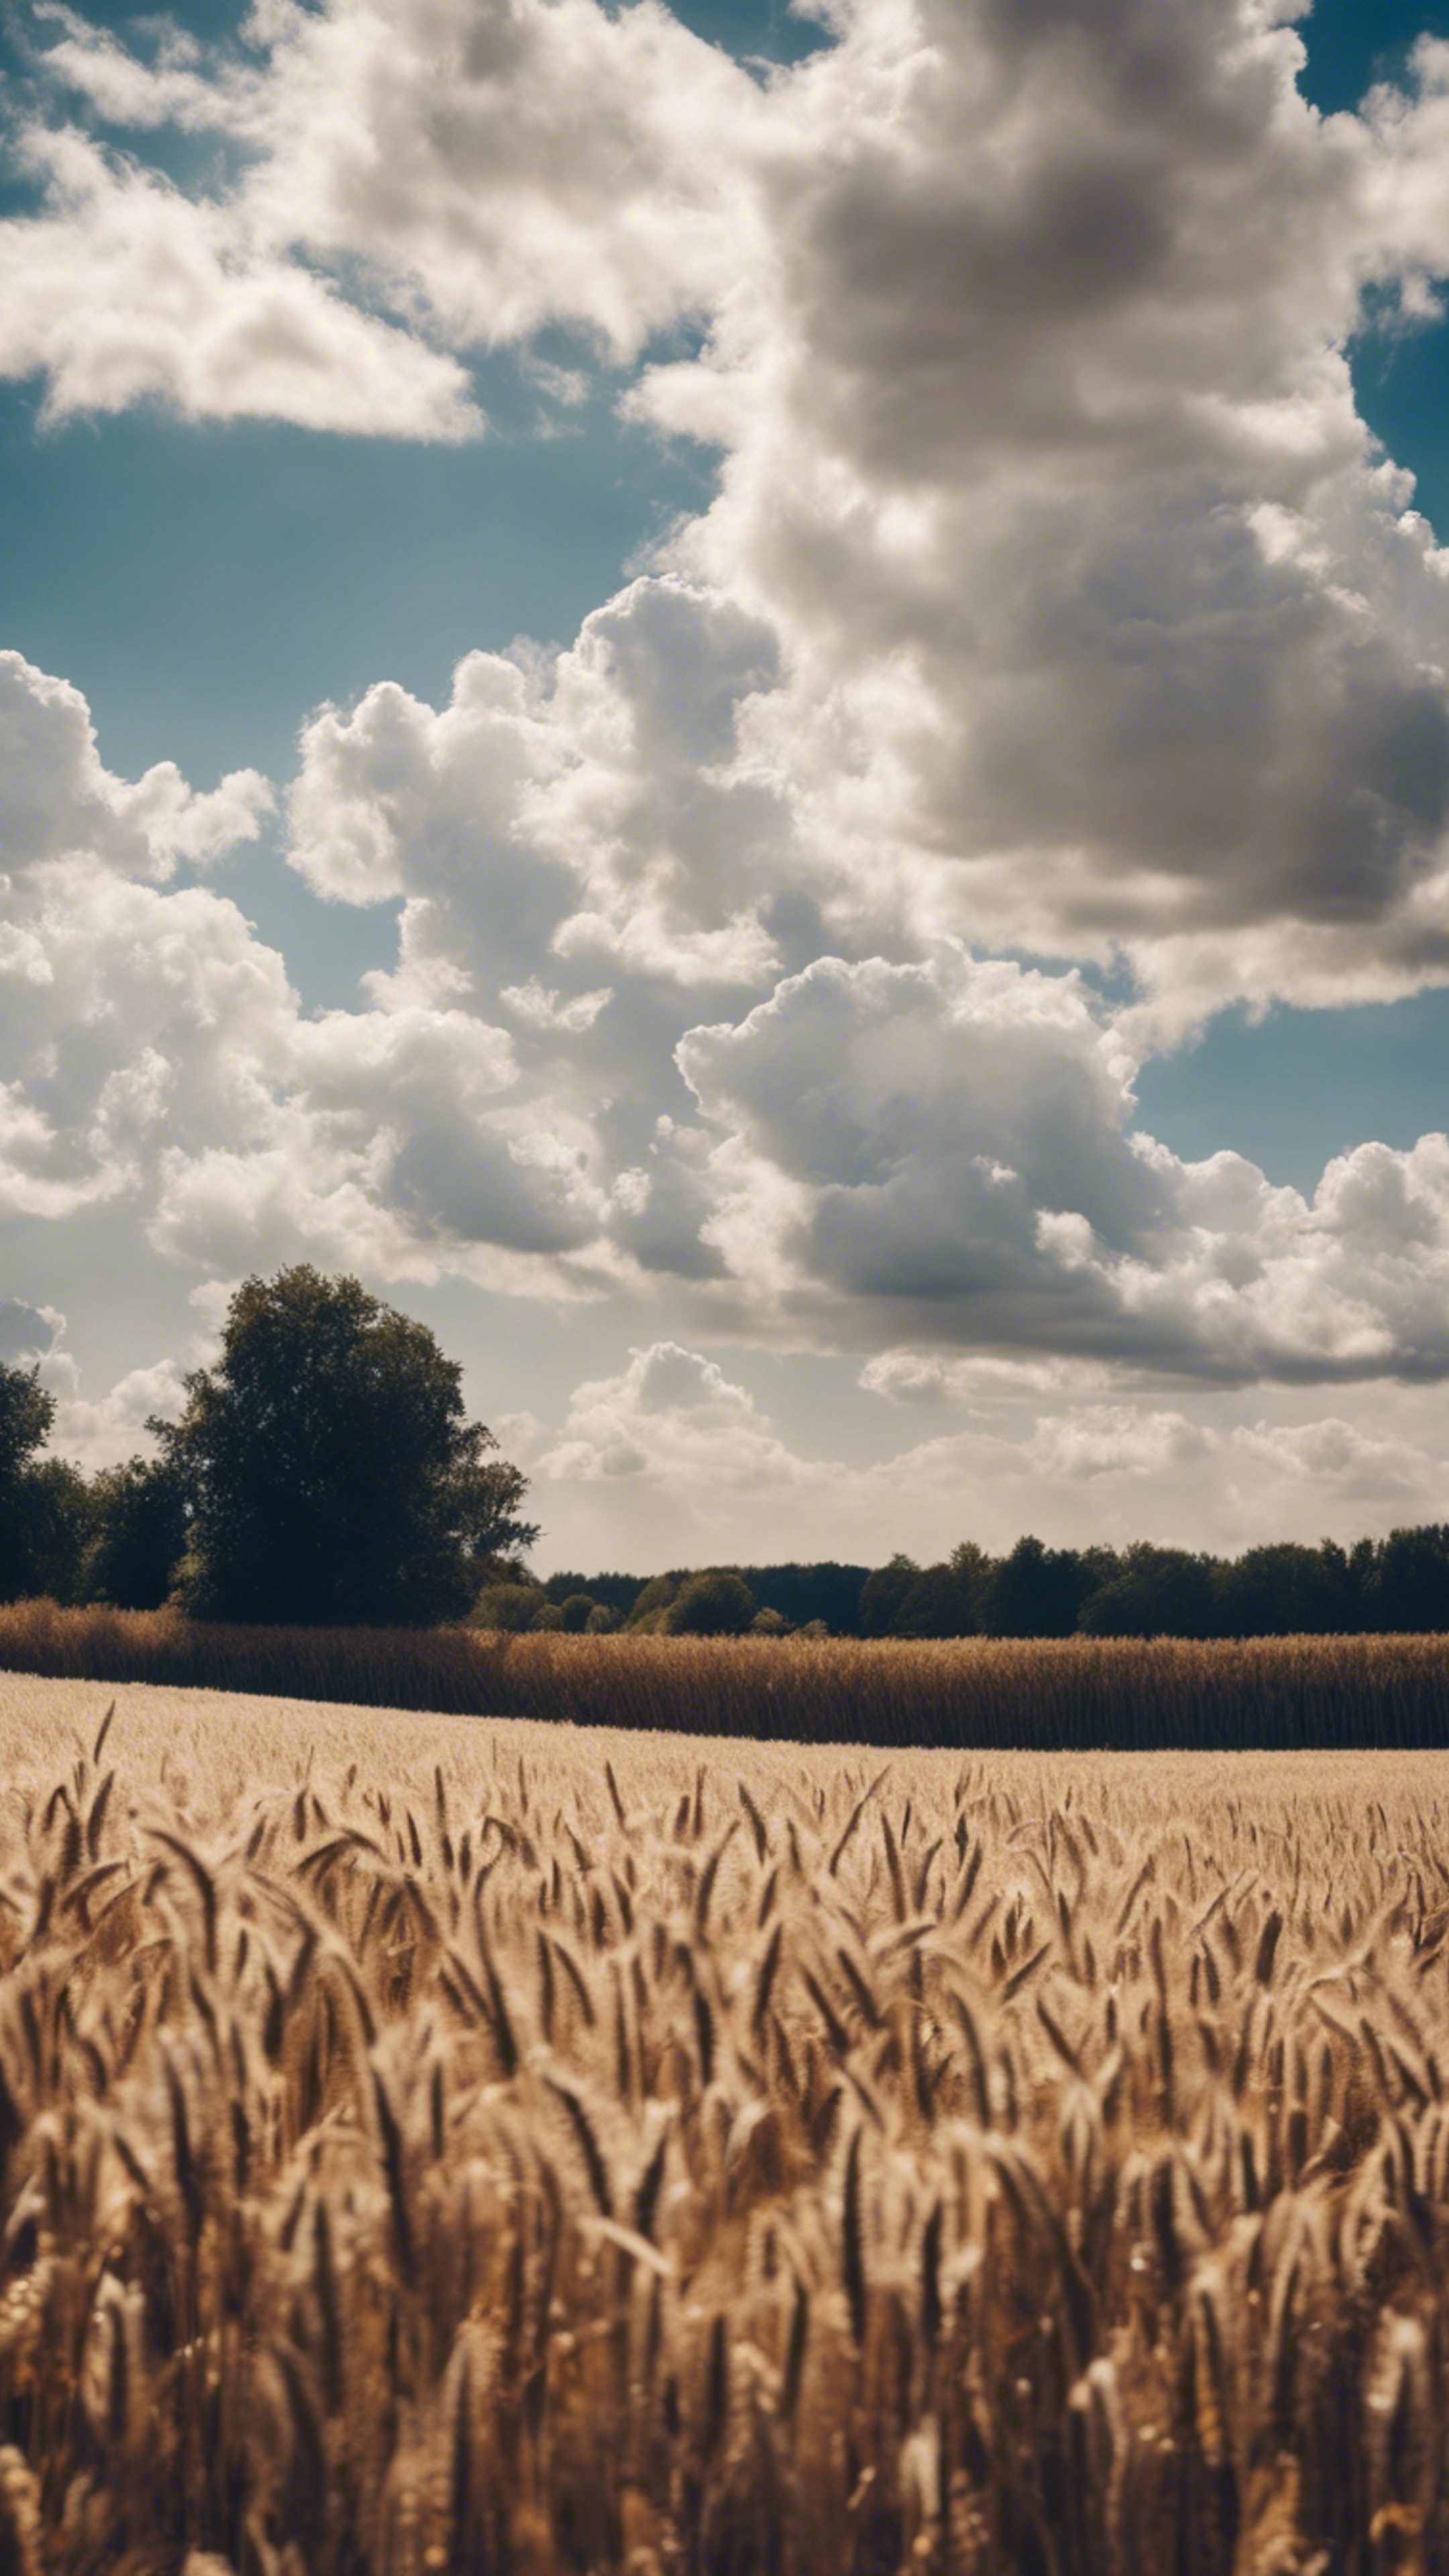 Fluffy white clouds dancing against a bright blue sky, casting shadows on an autumnal golden wheat field below. Wallpaper[4e4cb0a32b984044ba4f]